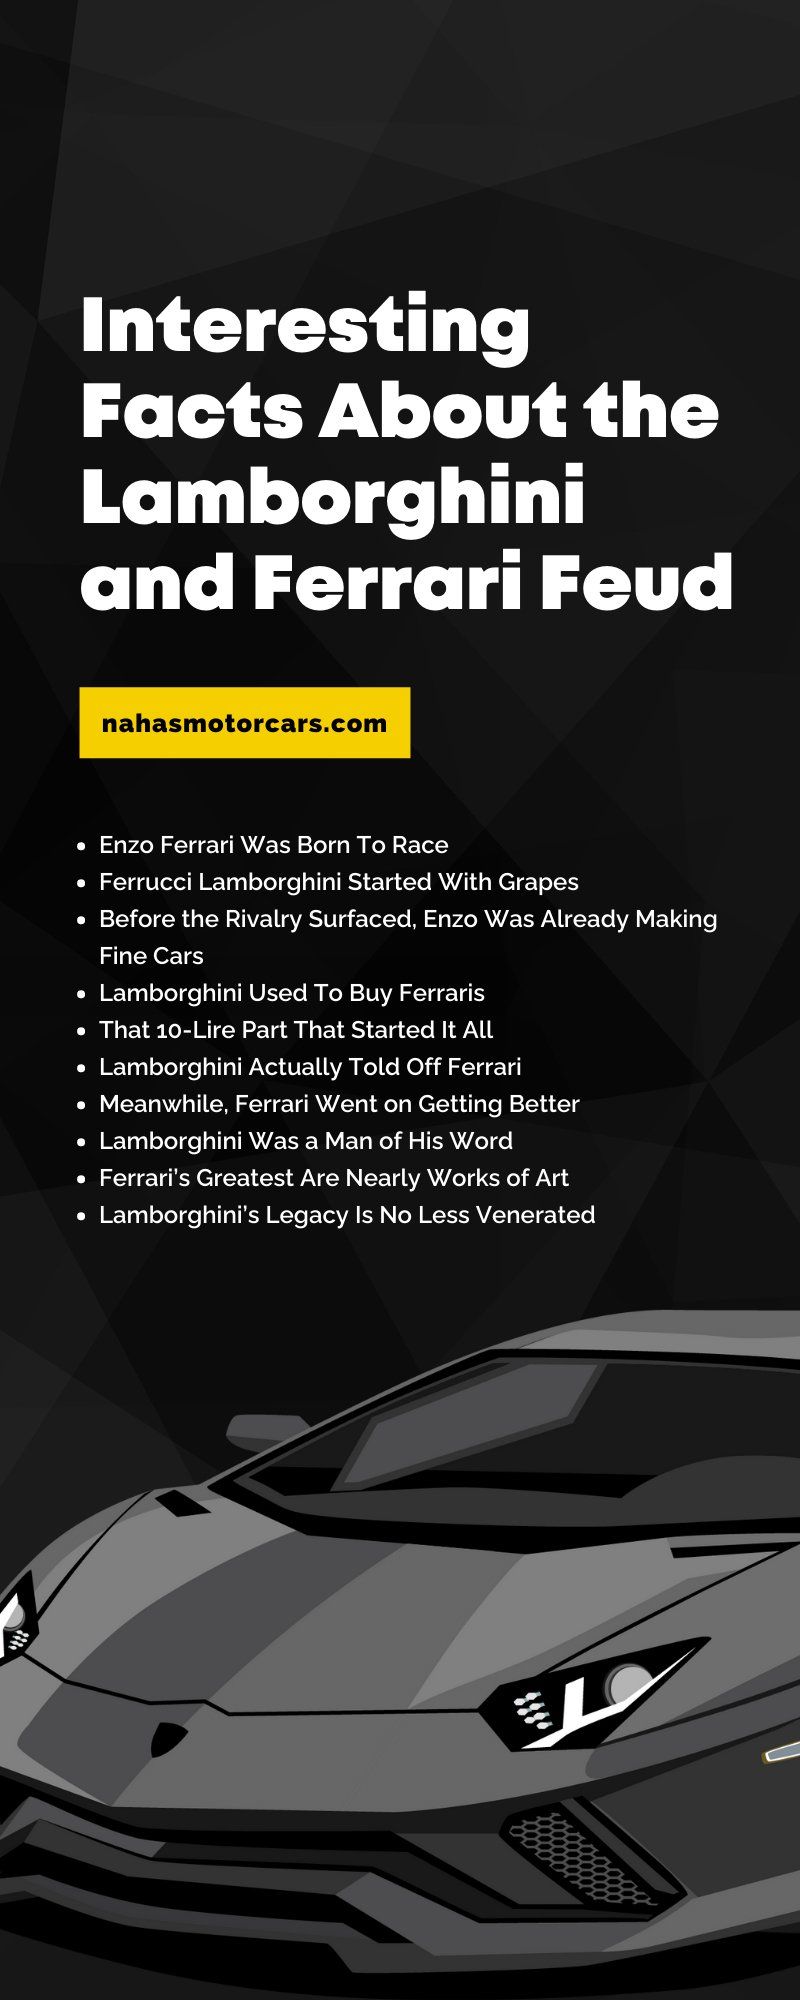 Interesting Facts About the Lamborghini and Ferrari Feud